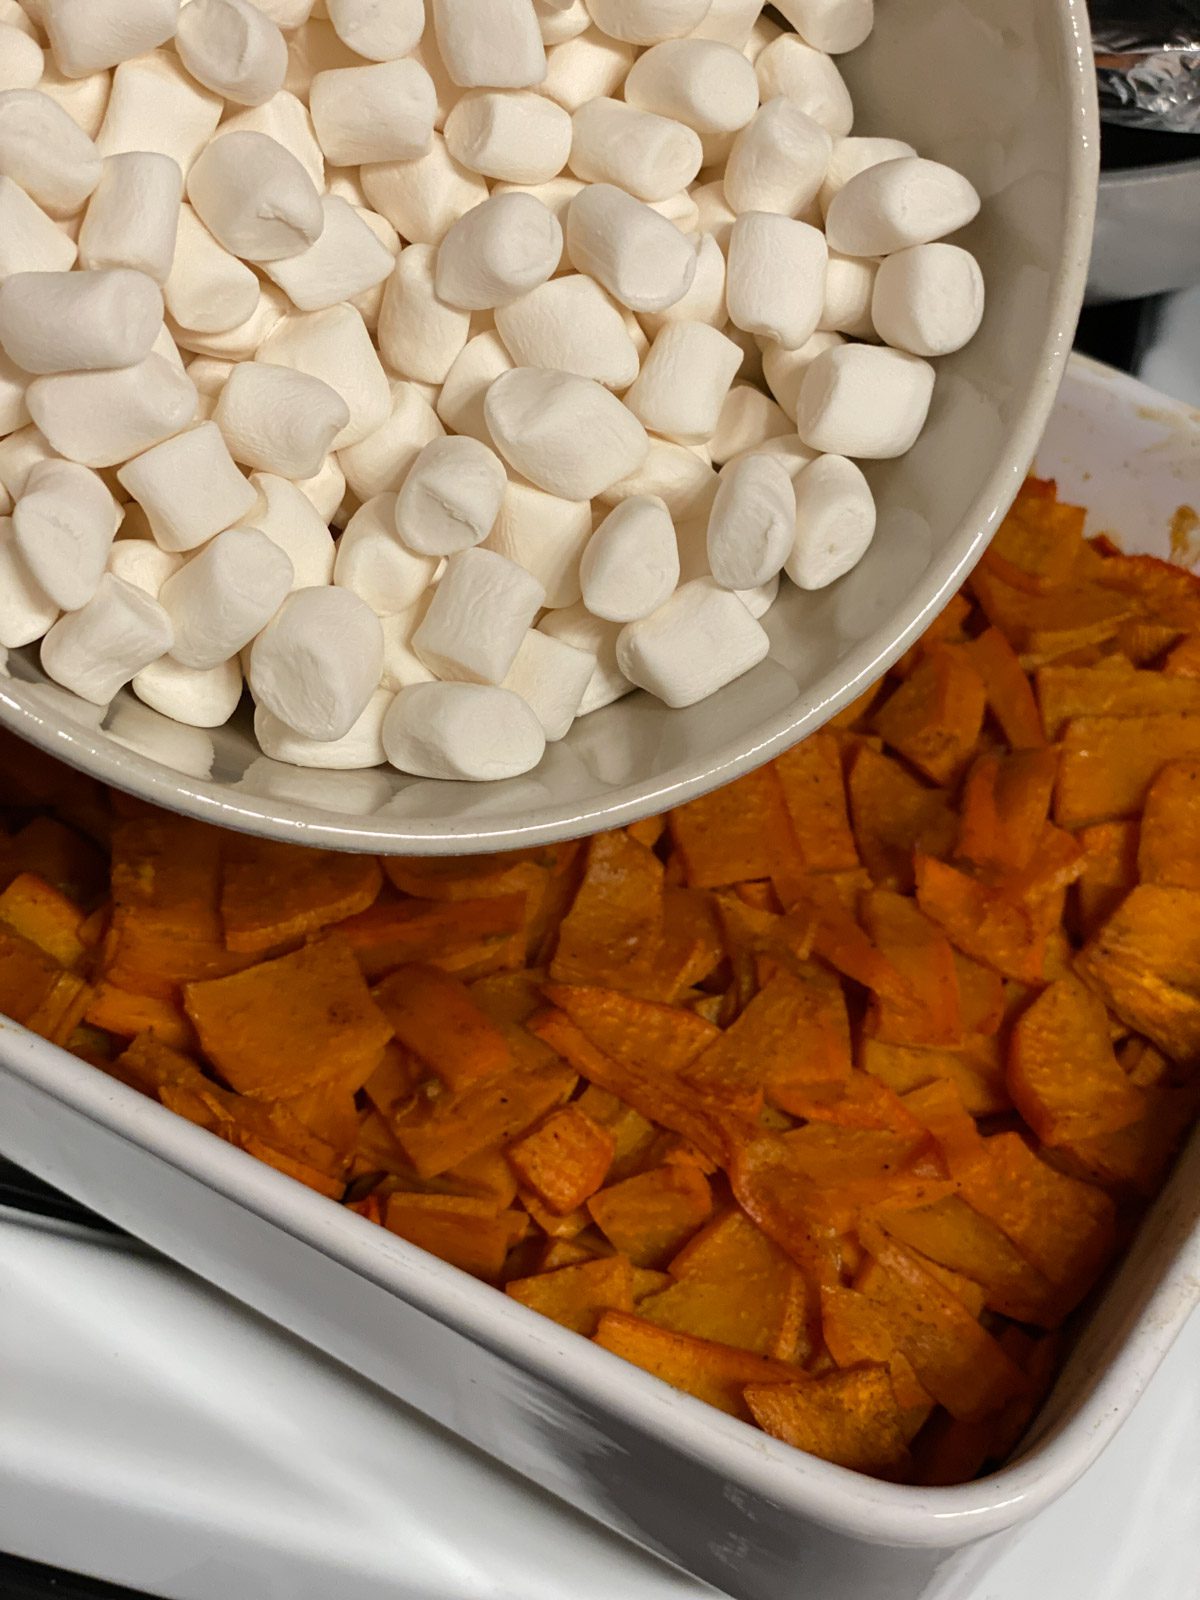 process shot of adding marshmallows to yam mixture in baking dish